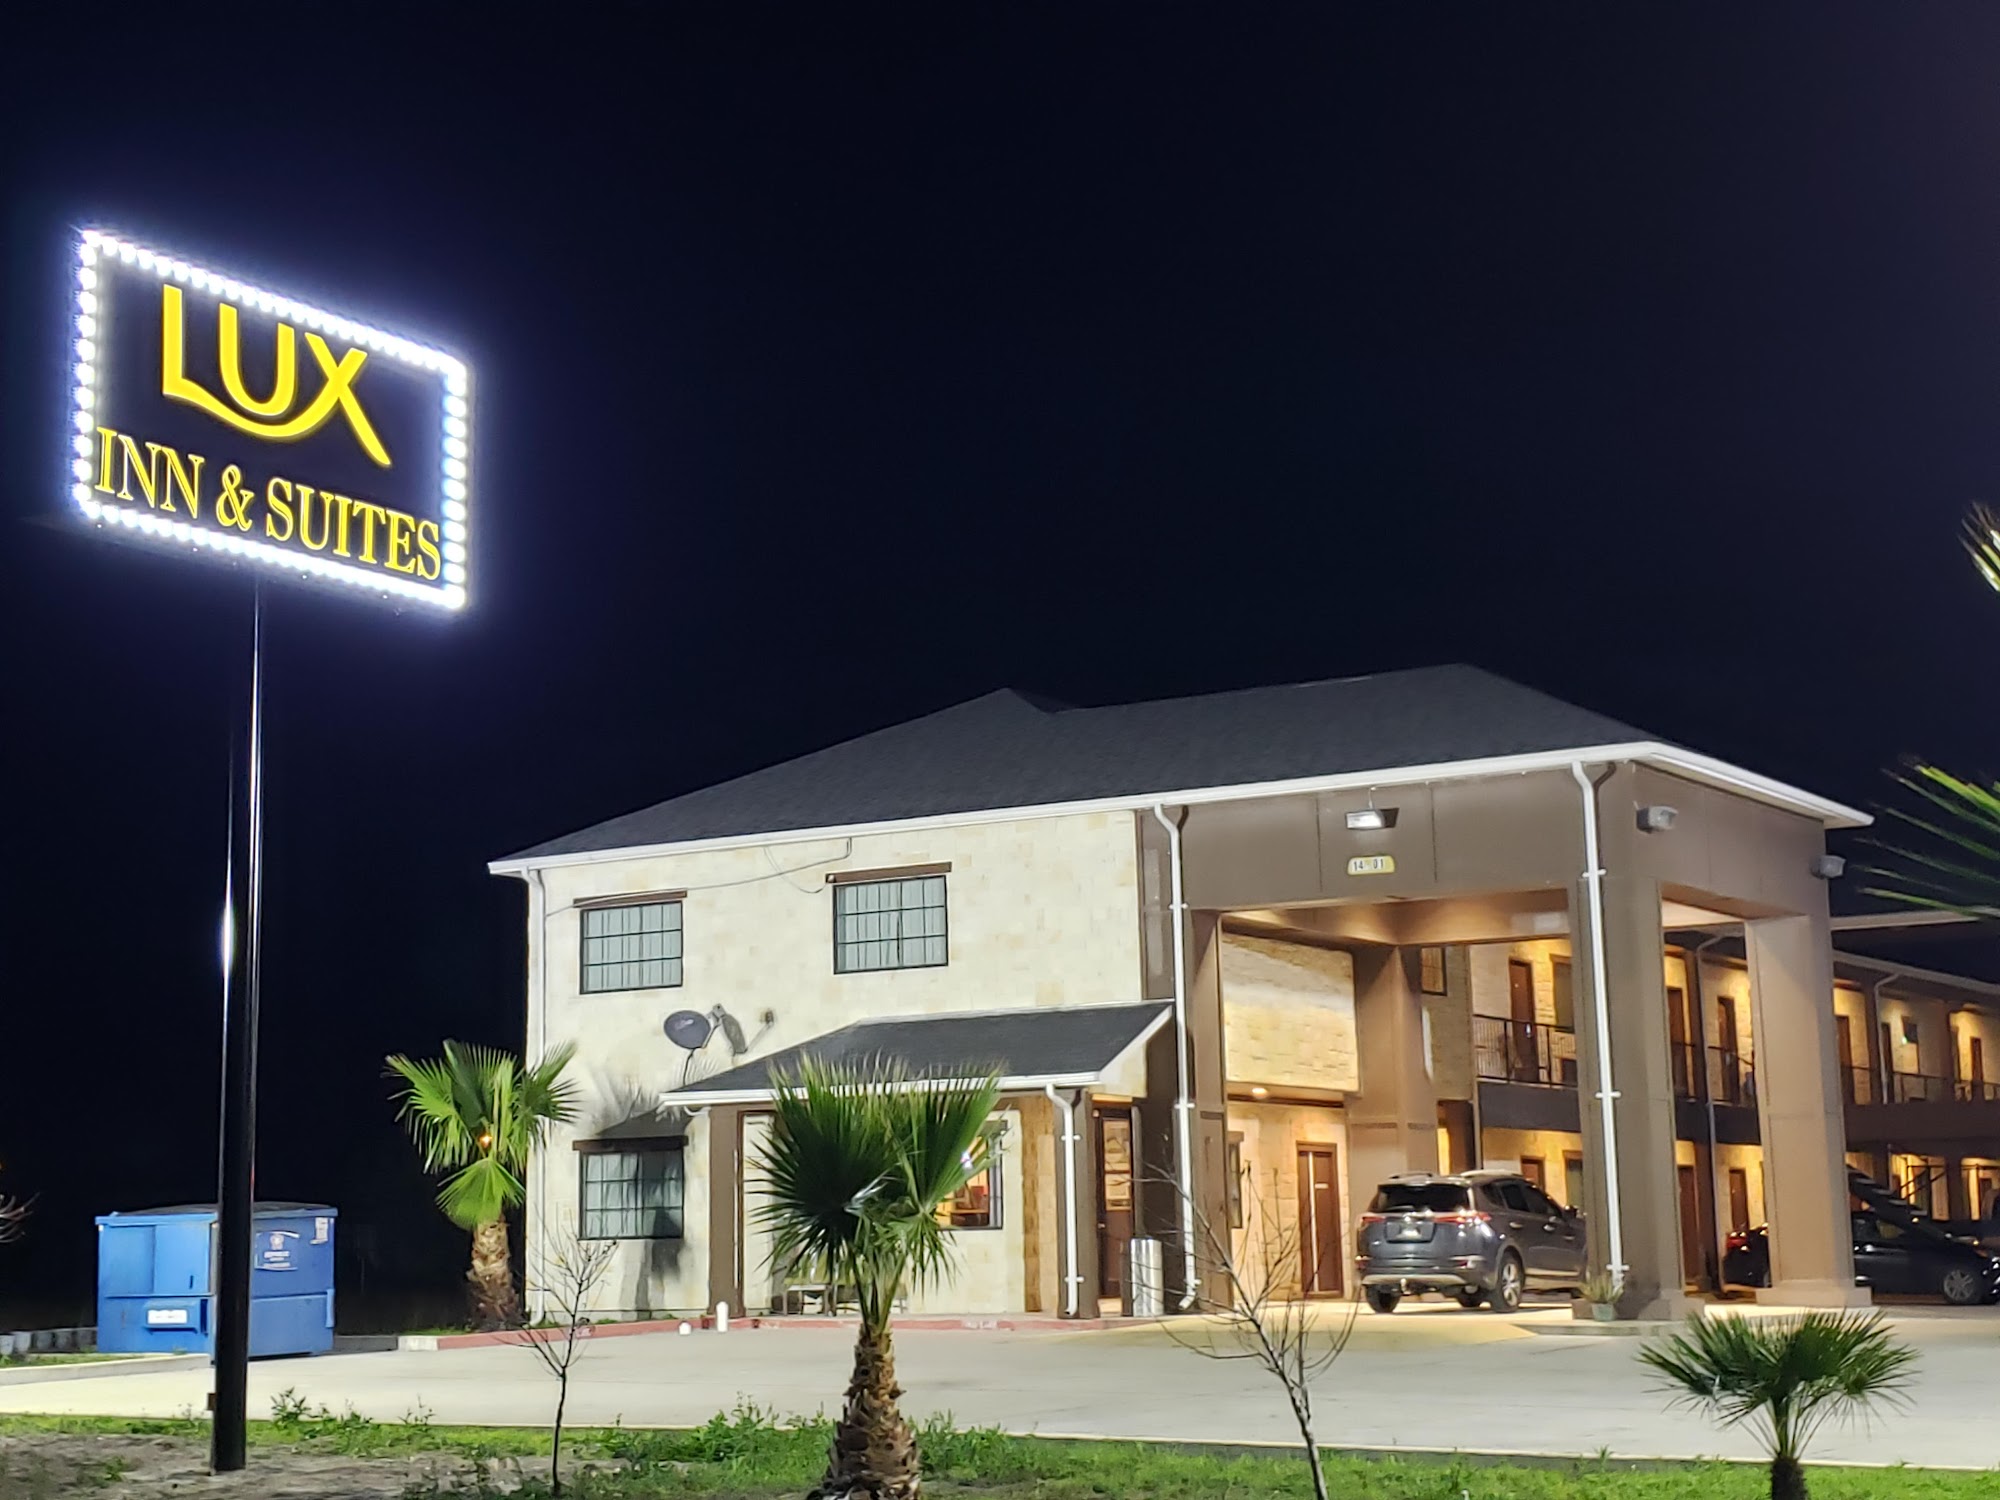 Lux Inn & Suites